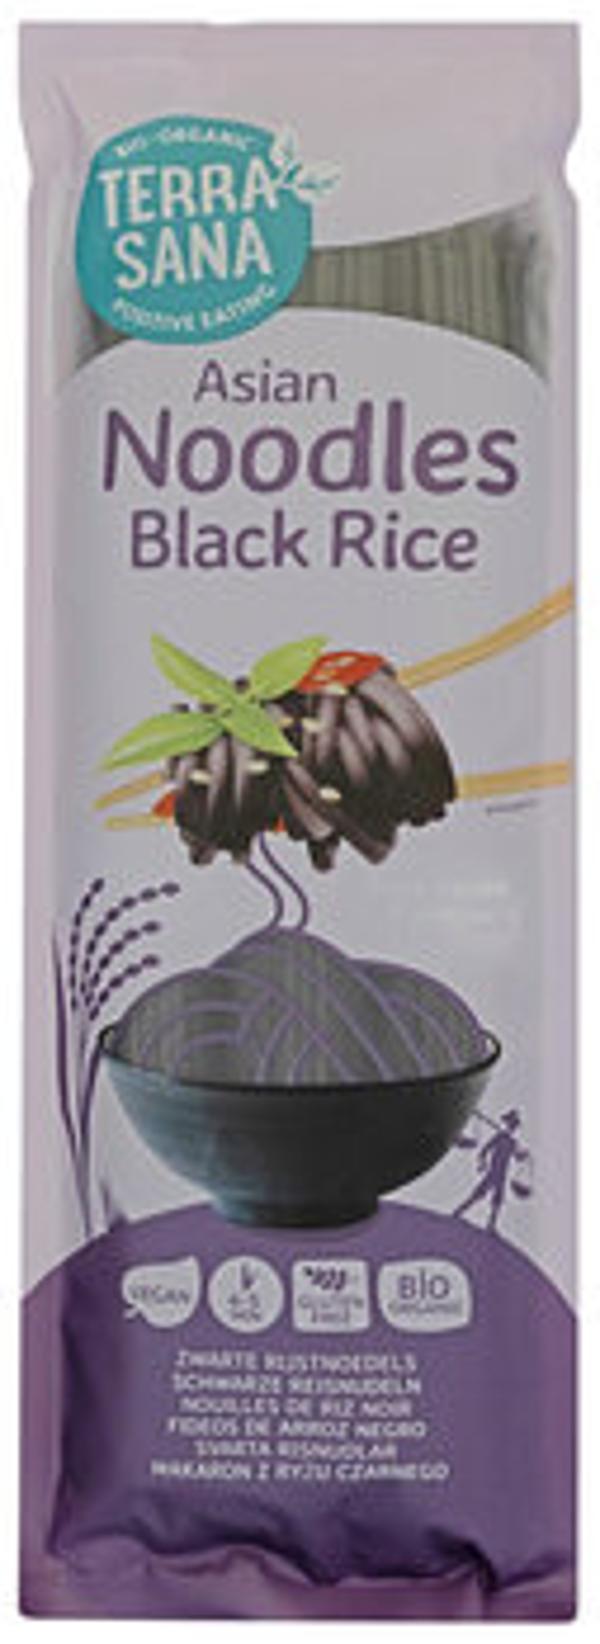 Produktfoto zu Schwarze Reisnudeln